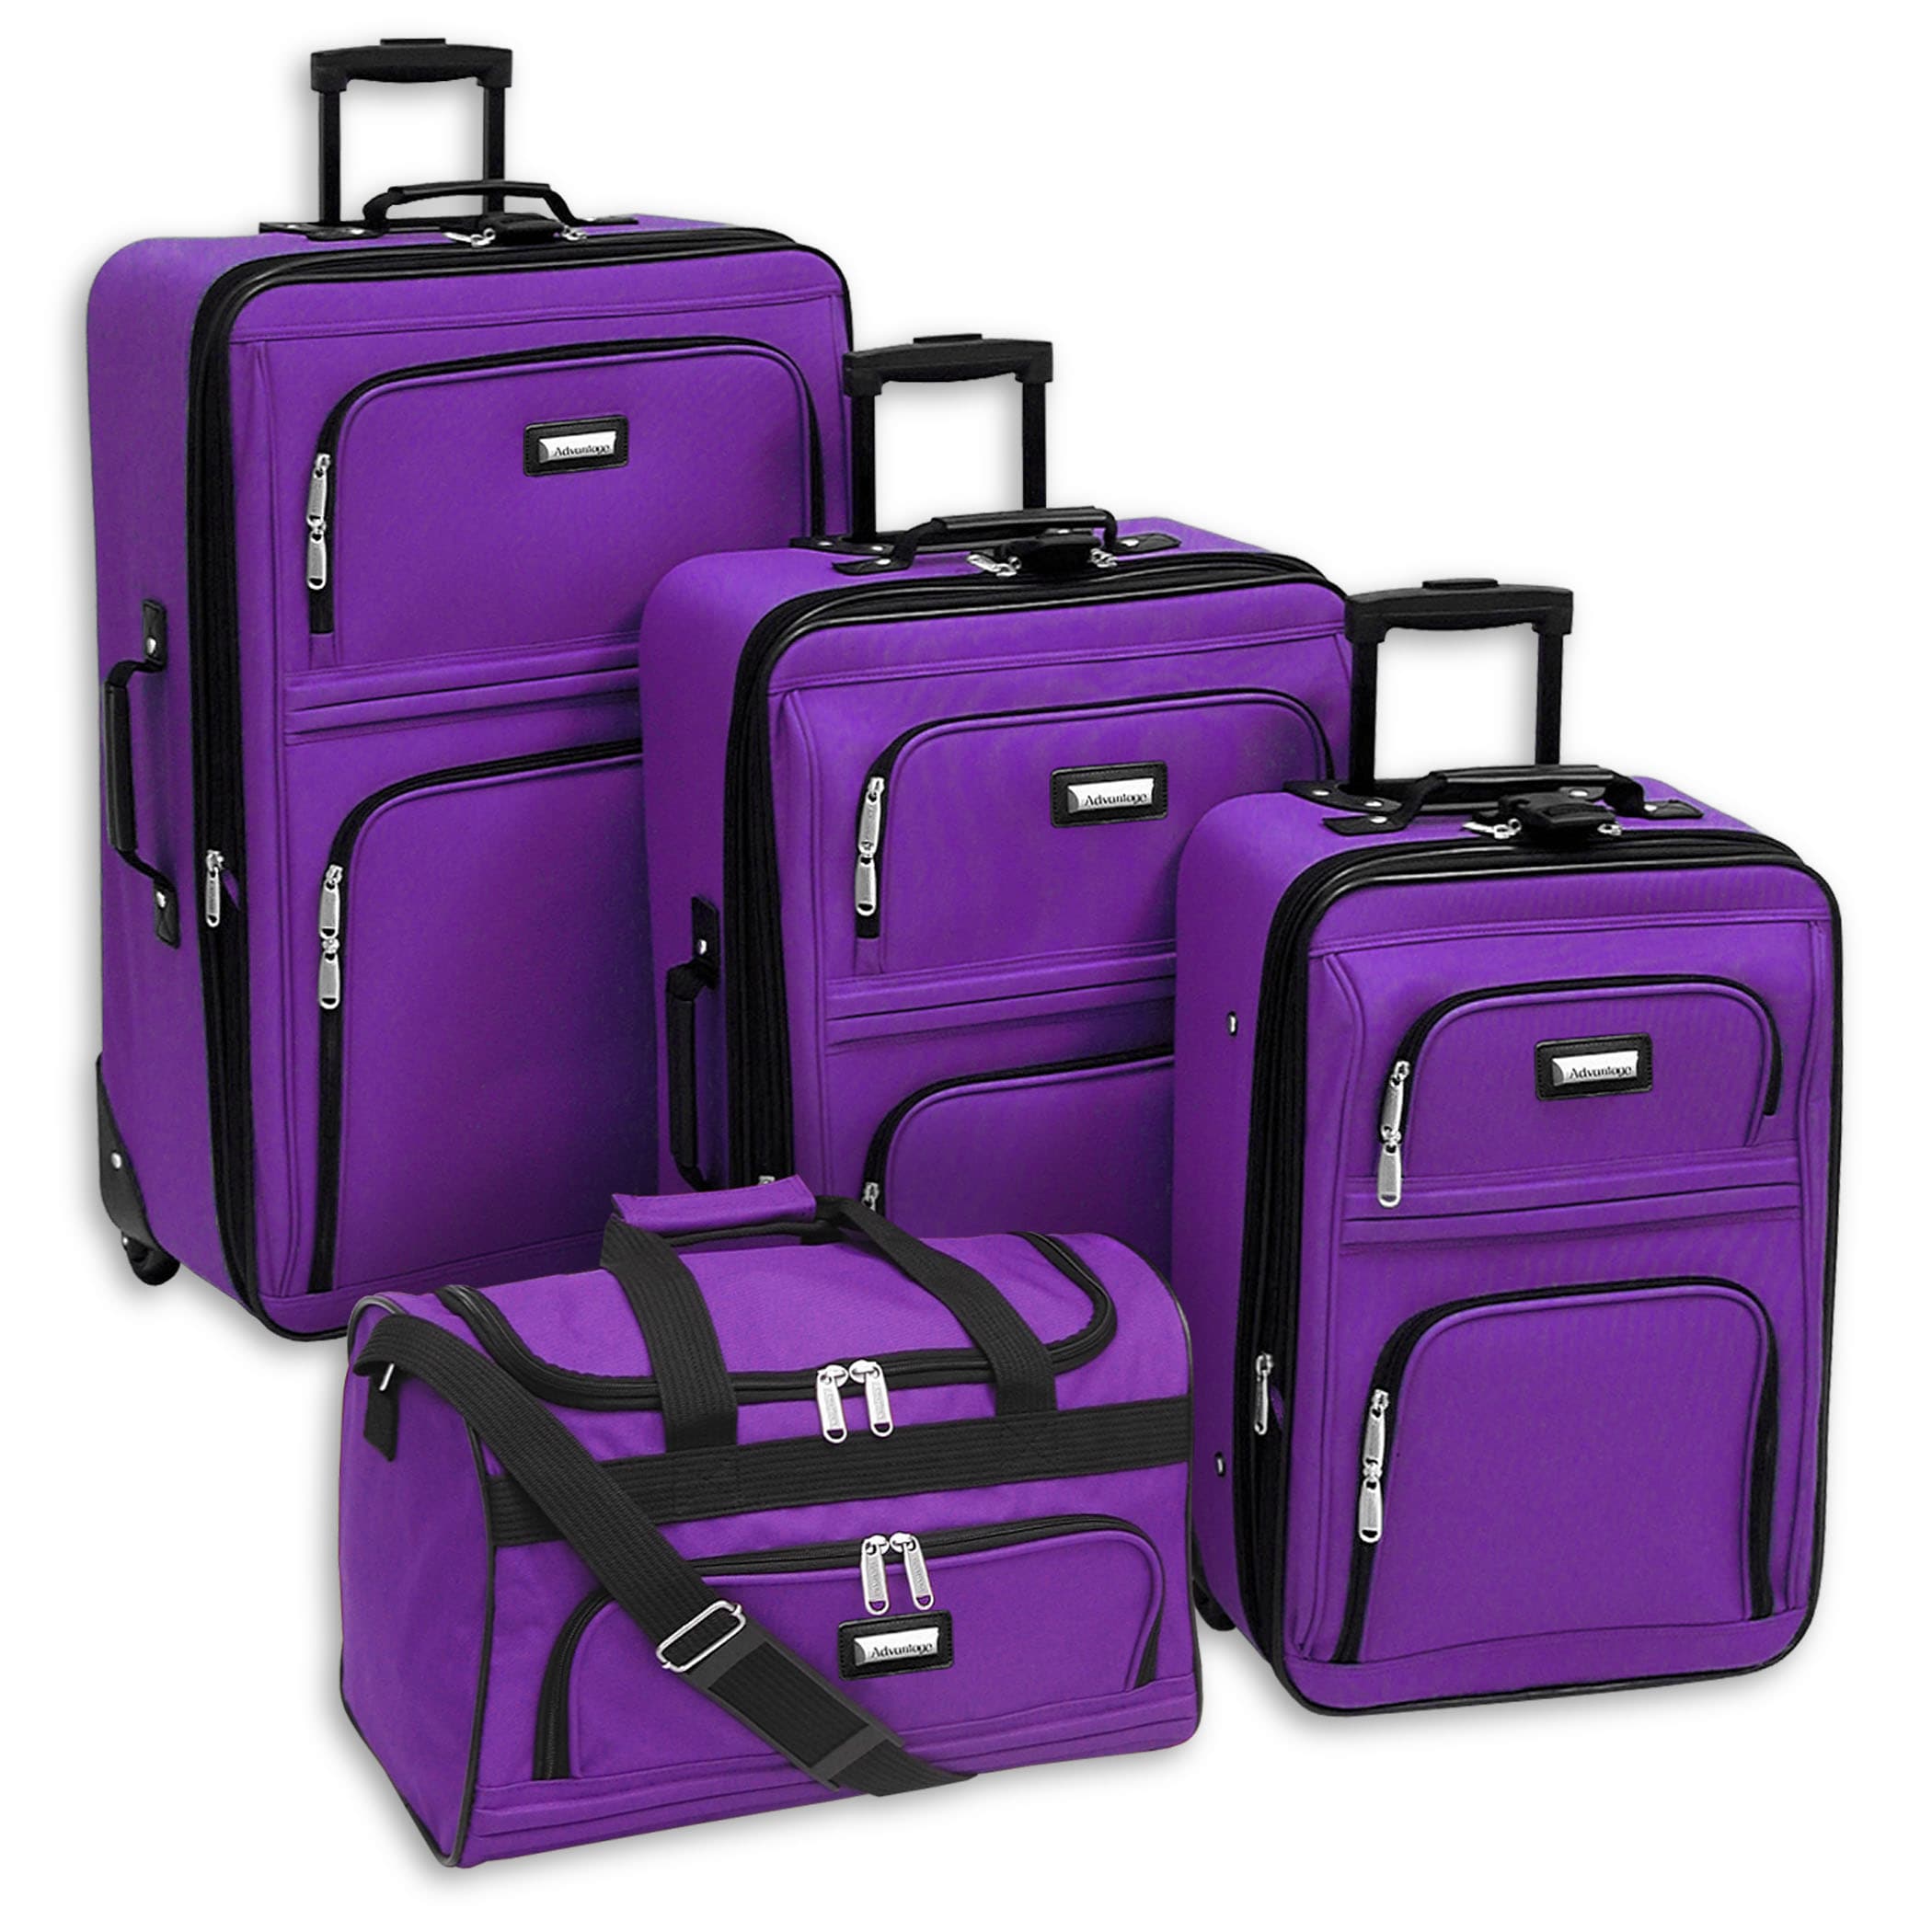 Advantage Trends Collection Amethyst 4-piece Luggage Set - 13858756 - literacybasics.ca Shopping ...